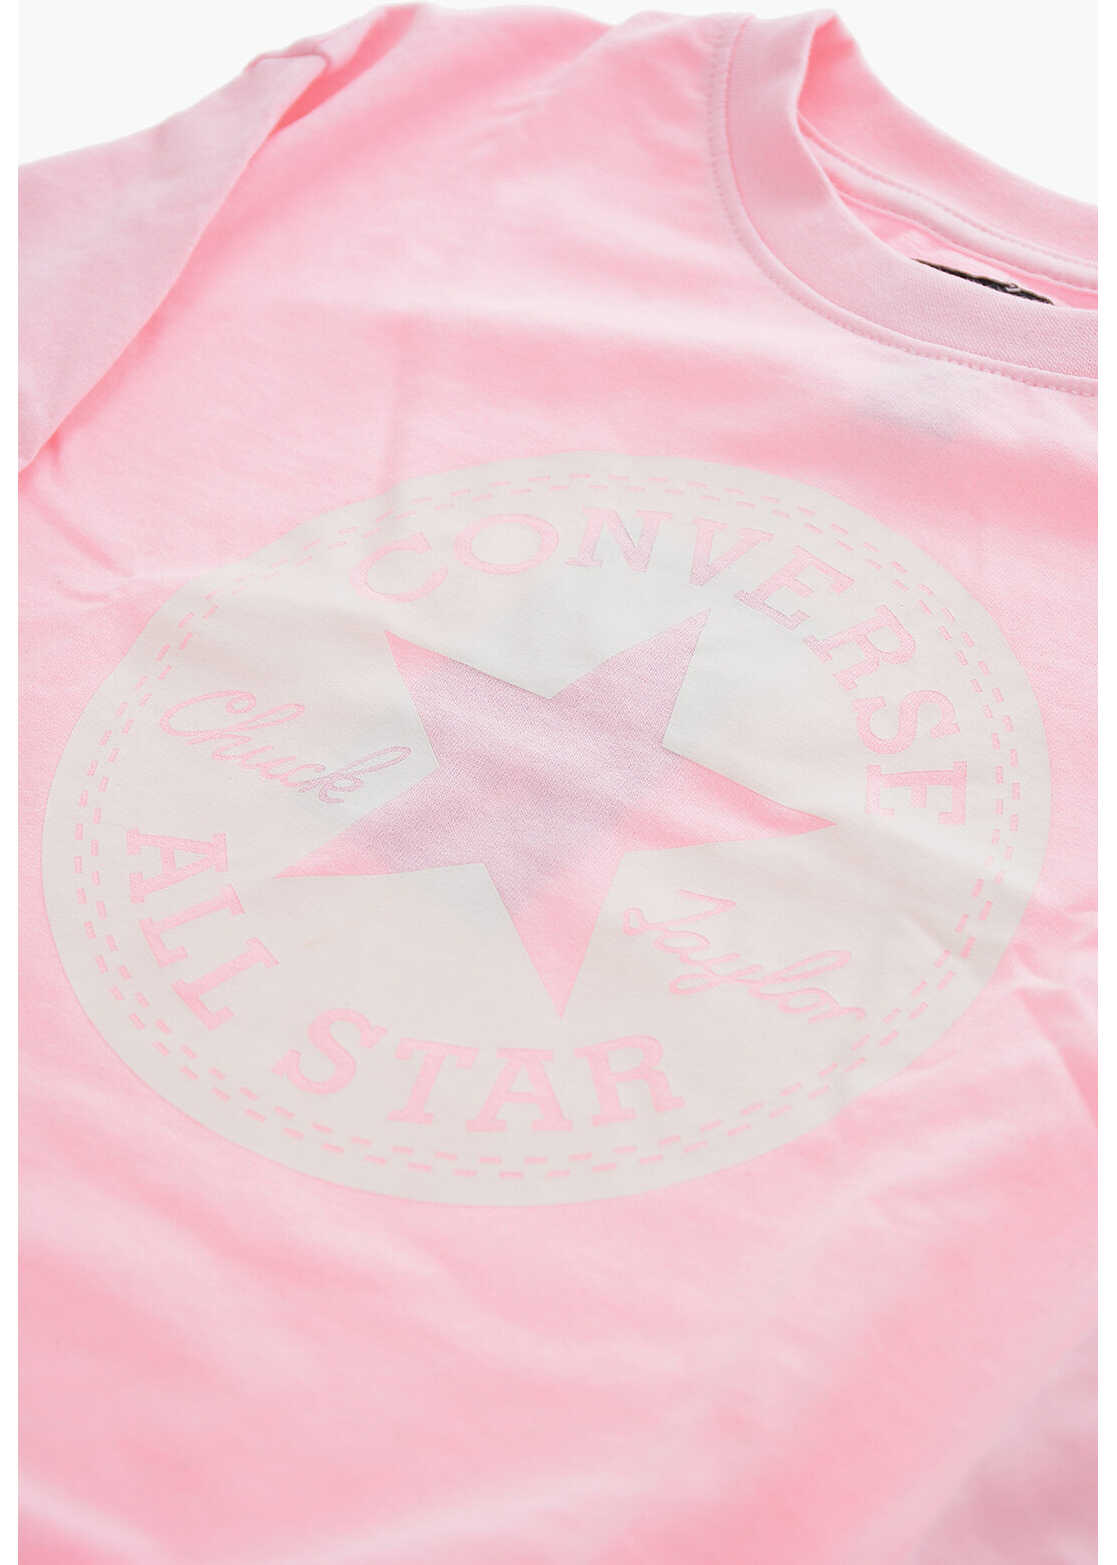 Converse All Star Chuck Taylor Maxi Logo Printed Crew-Neck Sweatshirt Pink